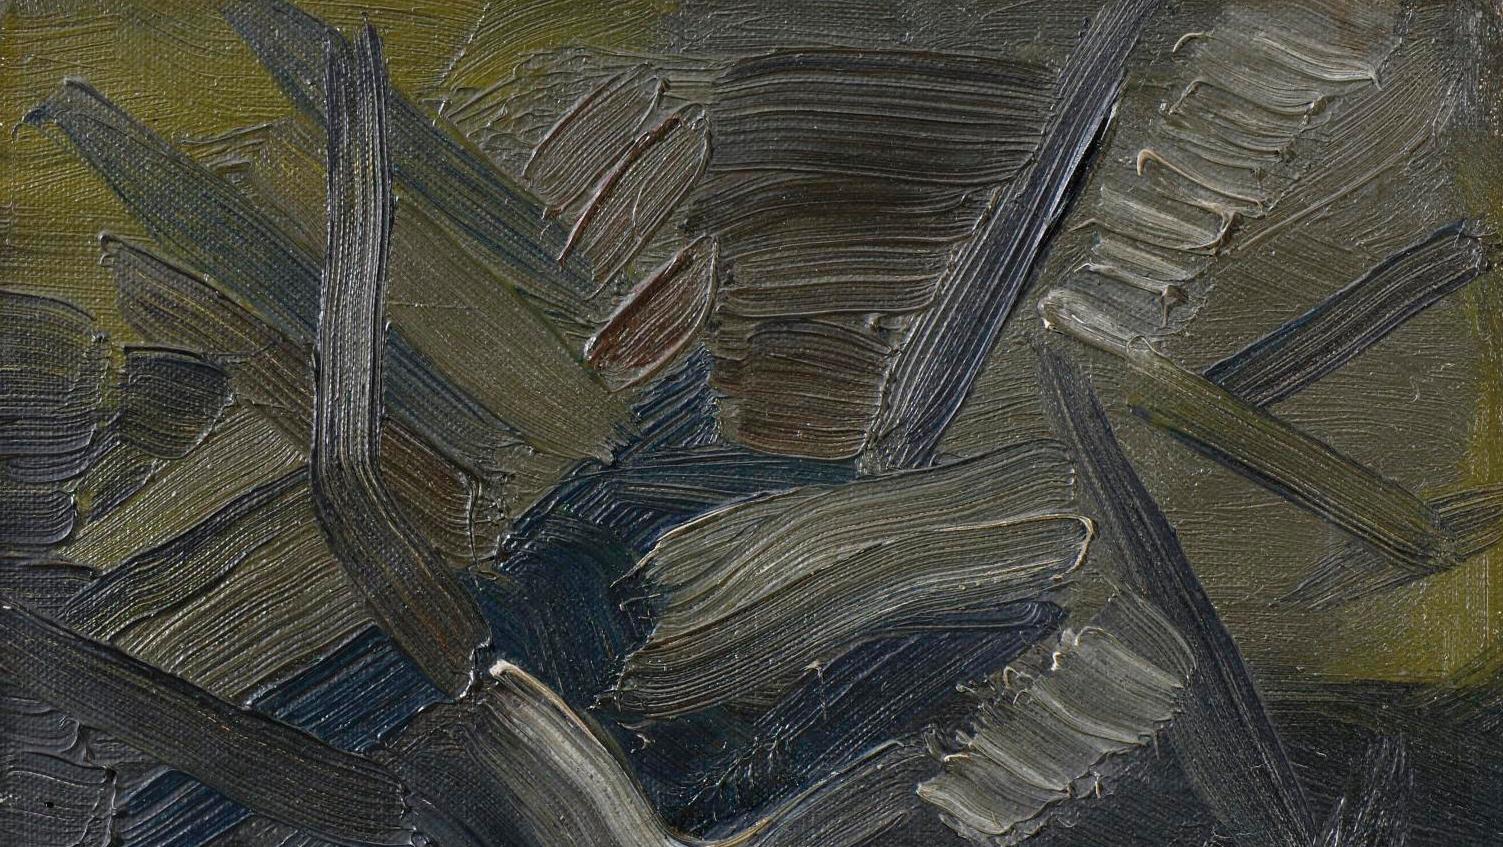 Nicolas de Staël (1914-1955), Composition, 1946, oil on canvas, signed, 22 x 27 cm/8.7... Nicolas de Staël: Towards Abstraction